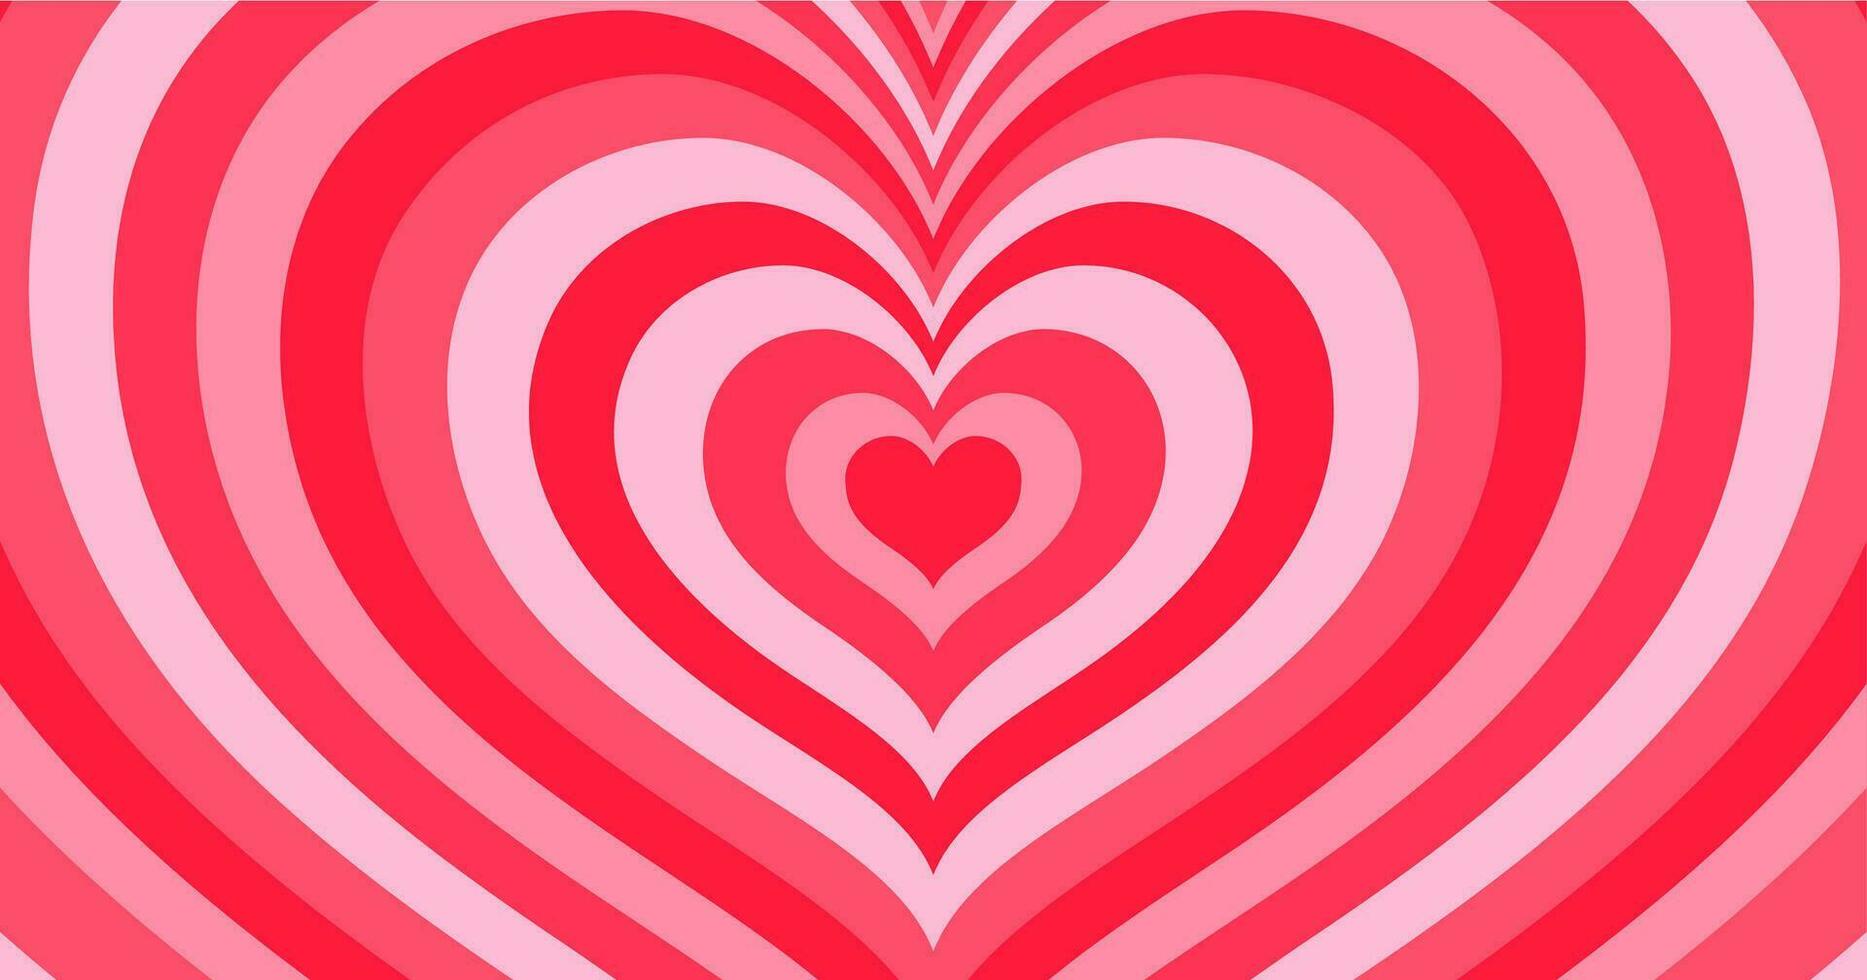 Love heart tunnel, romantic vector background